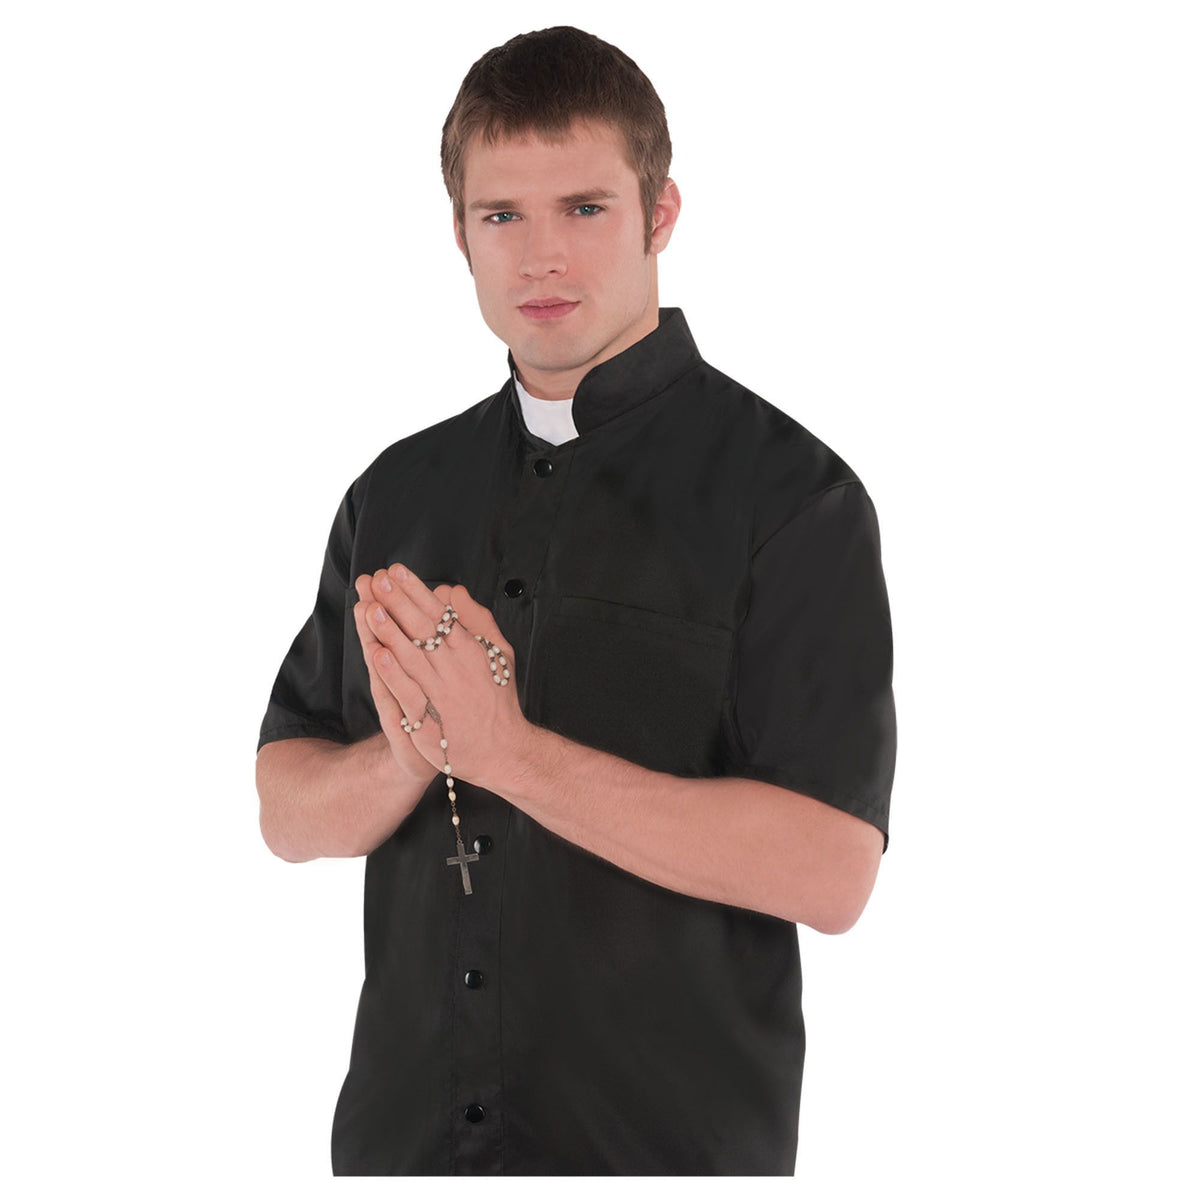 Priest Shirt Costume Adult Size Standard